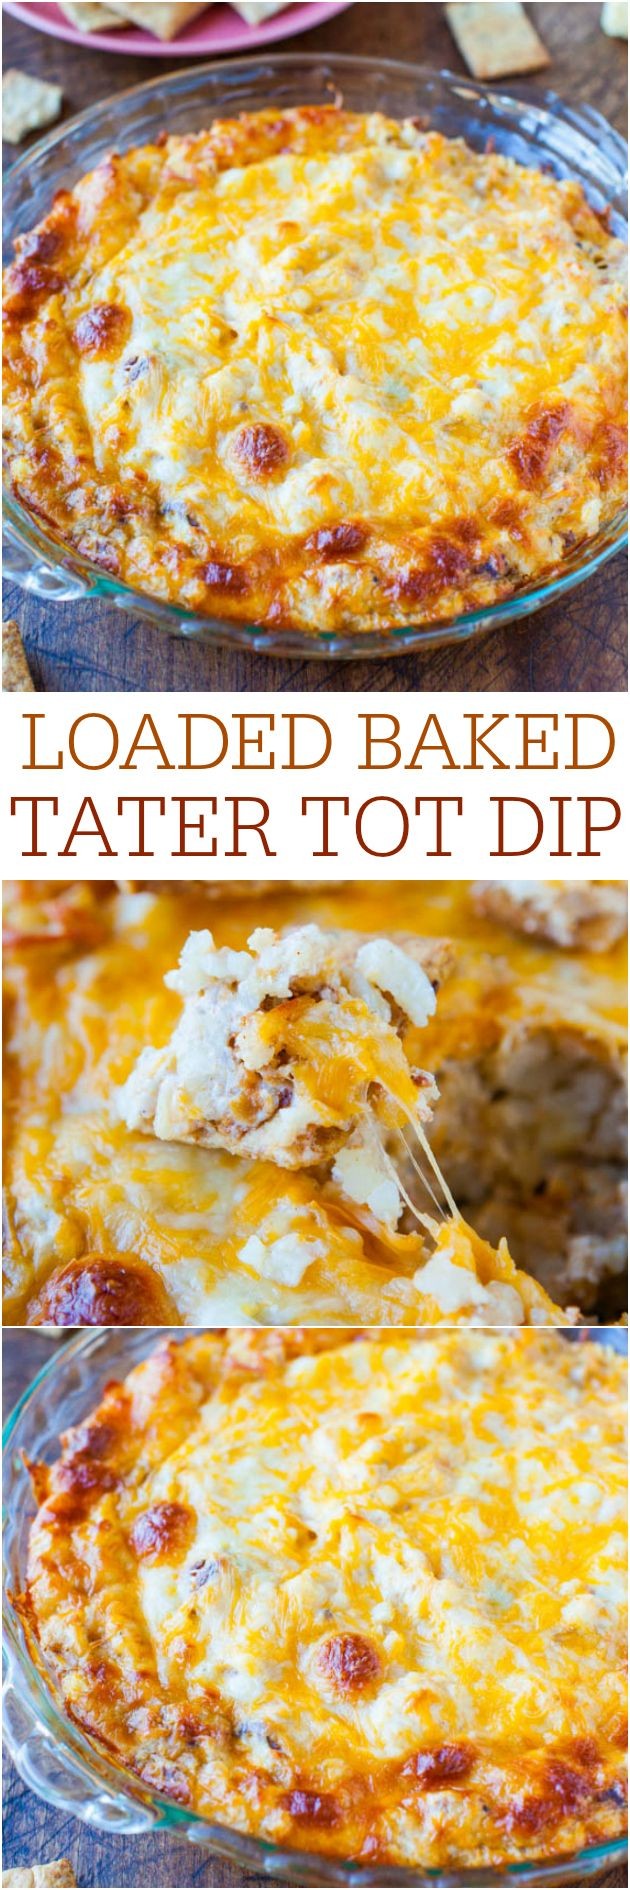 Loaded Baked Tater Tot Dip - All your favorite bak...